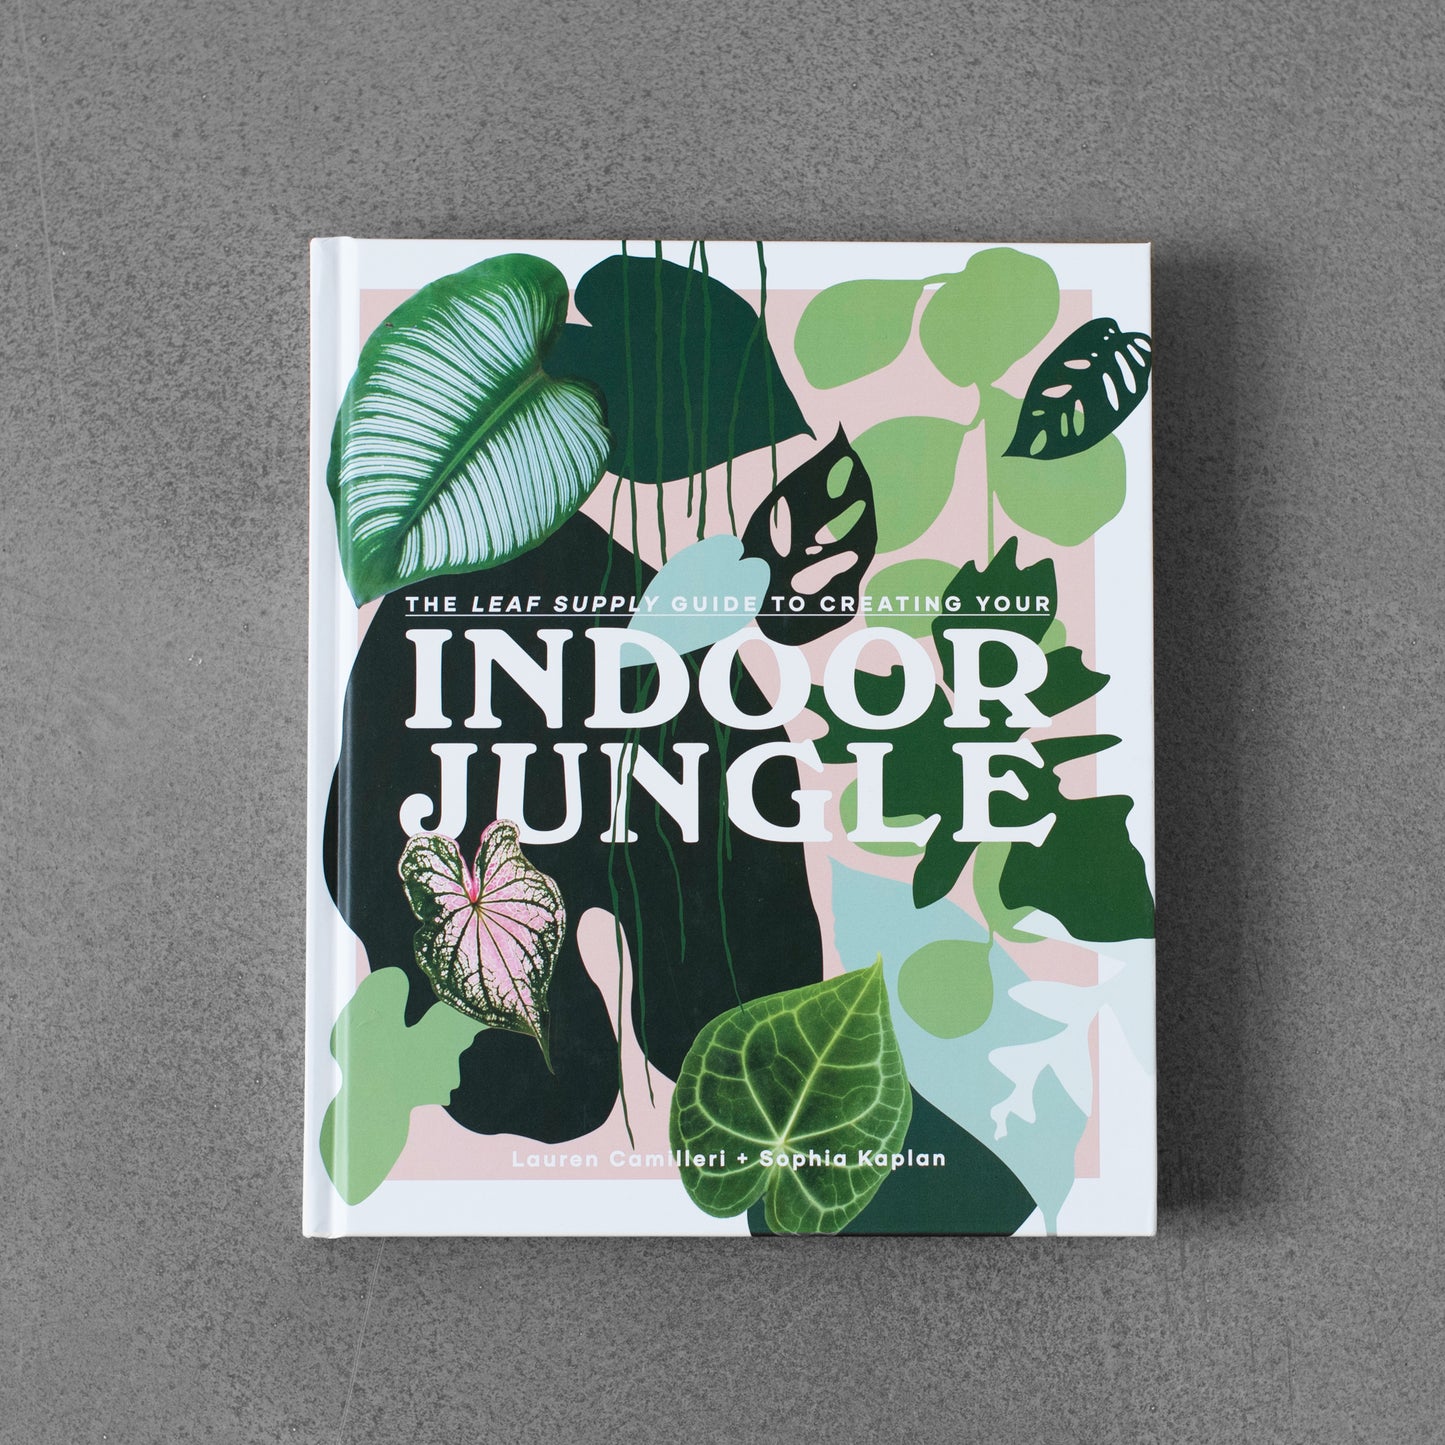 The Leaf Supply Guide to Creating Yours: Indoor Jungle - Lauren Camilleri & Sophia Kaplan